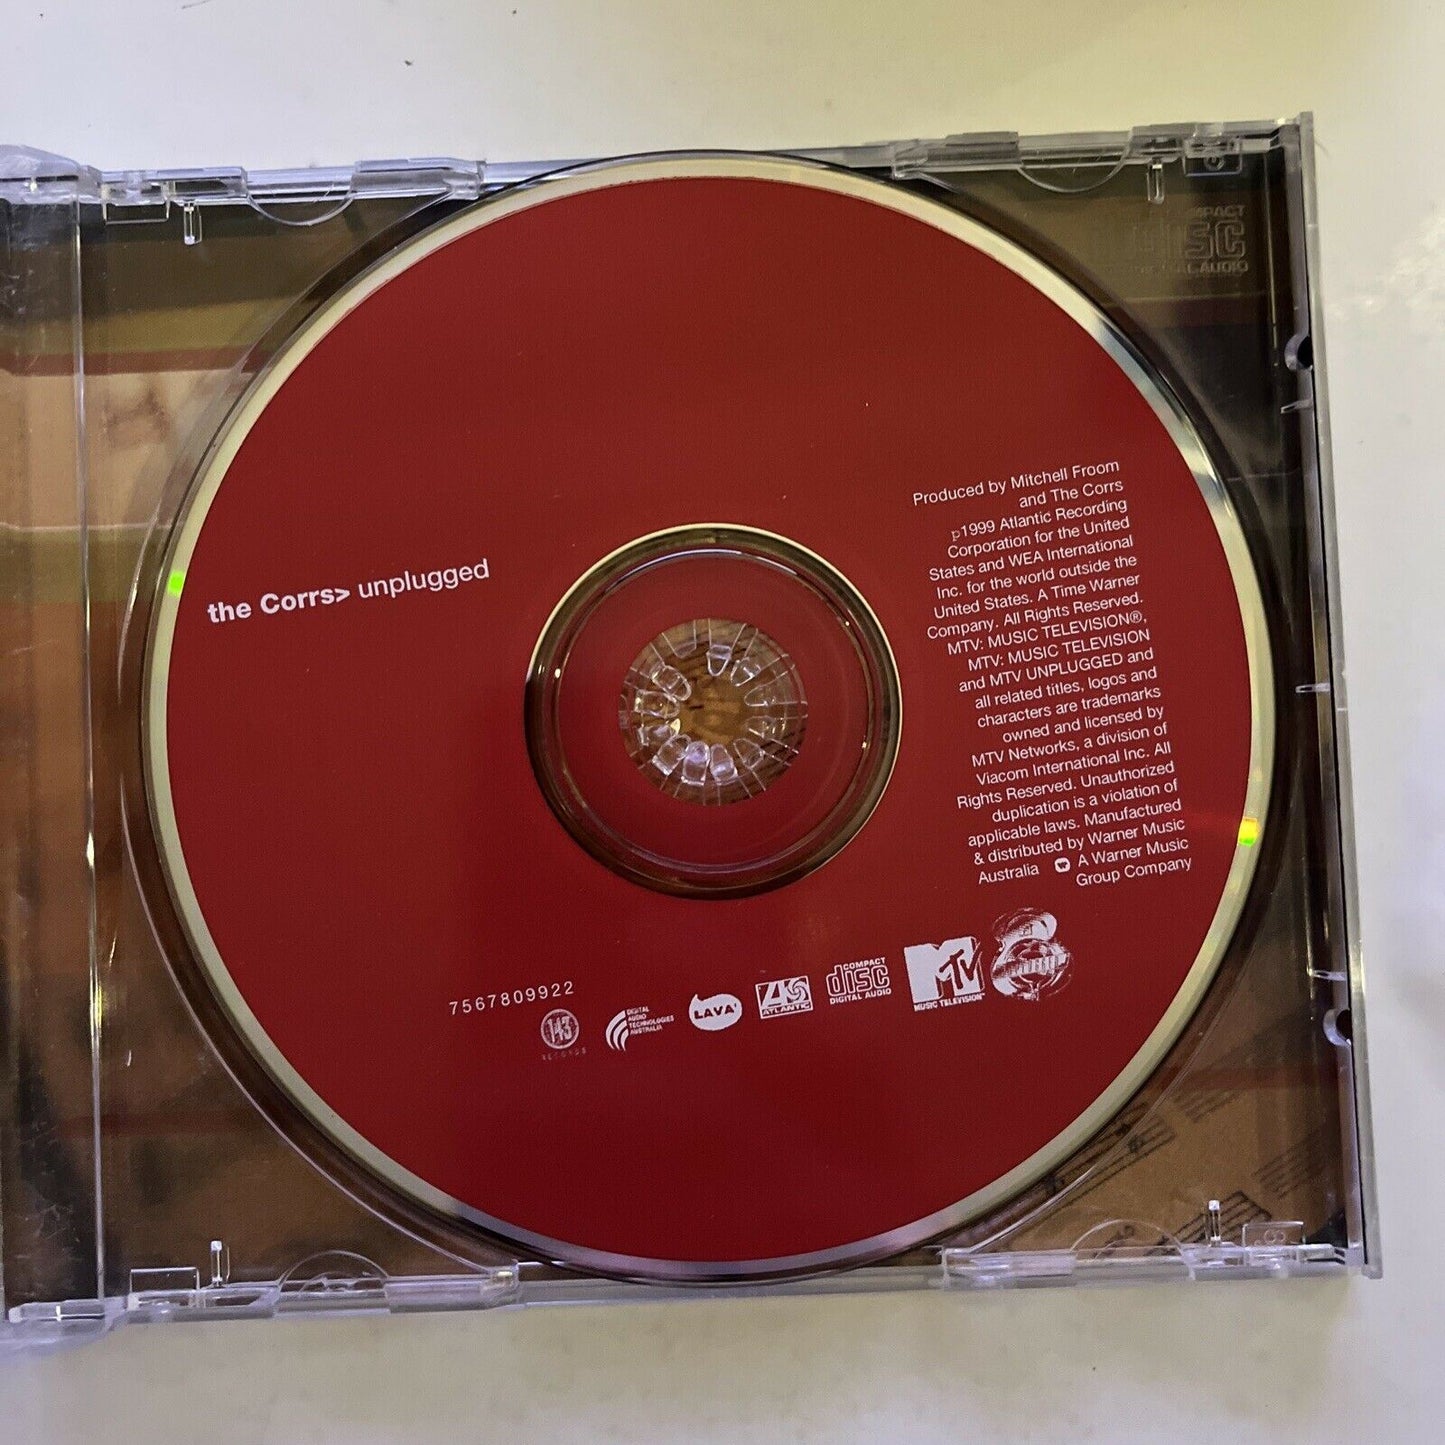 The Corrs – Unplugged (CD, 1999) Album